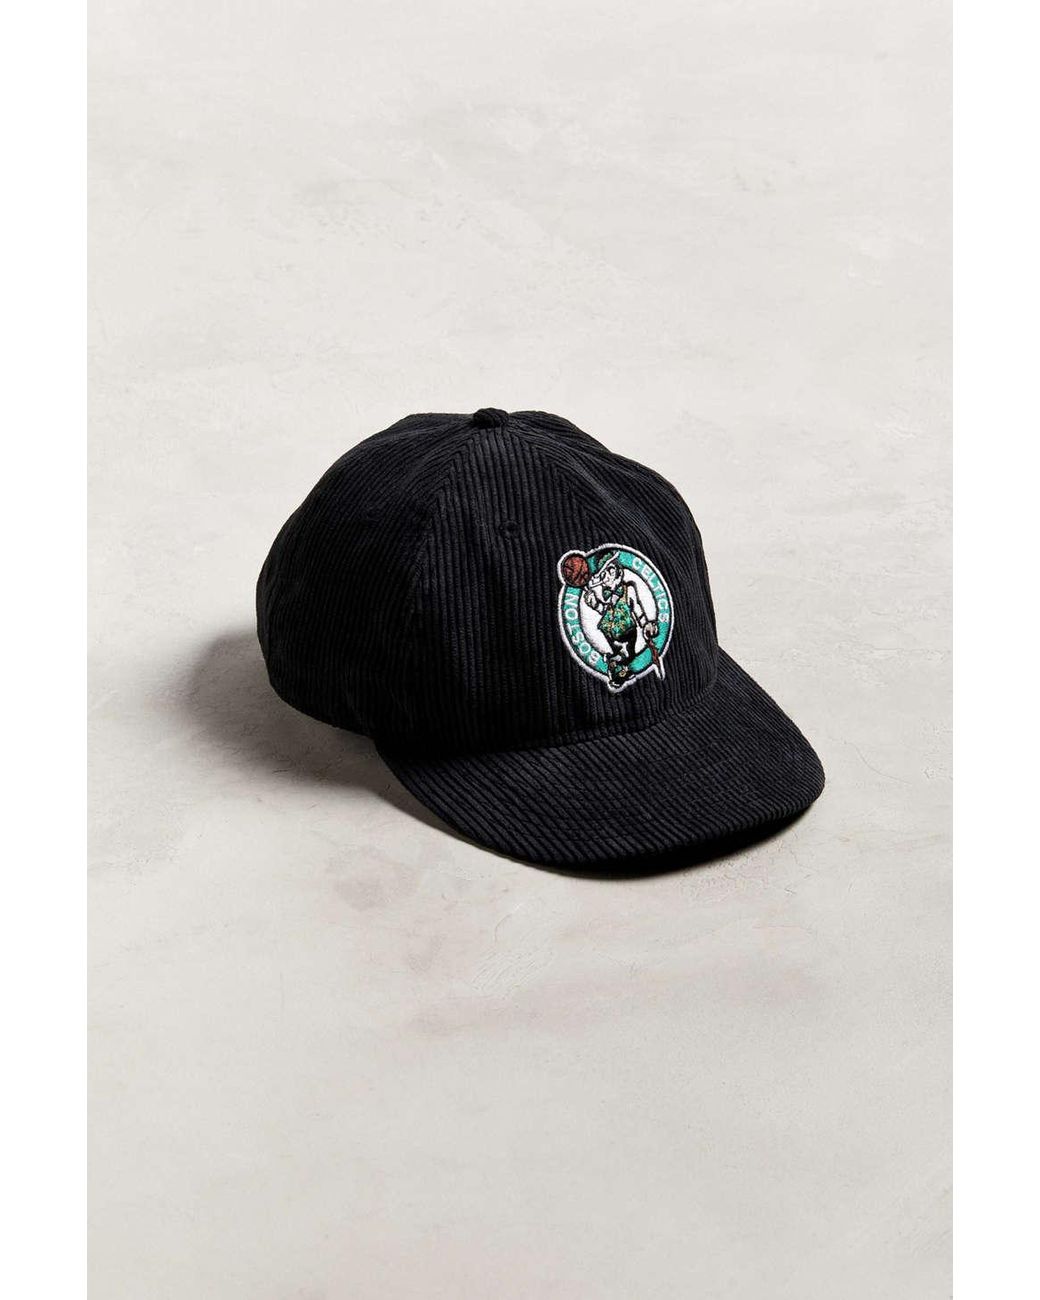 Men's New Era Gray Boston Celtics The Golfer Corduroy 9FIFTY Snapback Hat